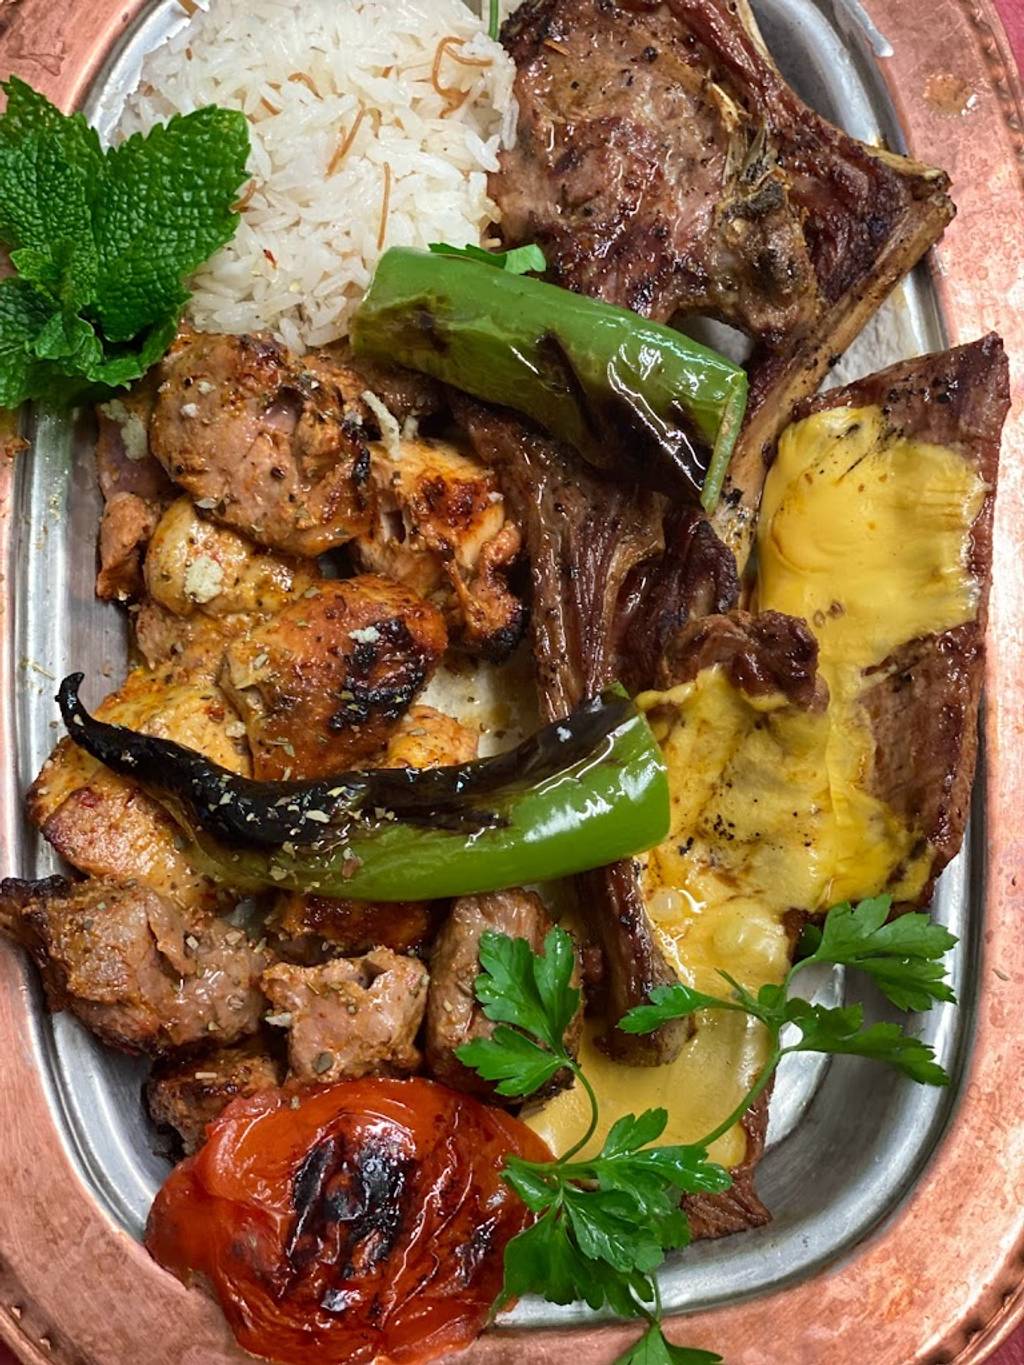 Palace Restaurants Grill Halal turc Vénissieux - Food Tableware Ingredient Recipe Cuisine